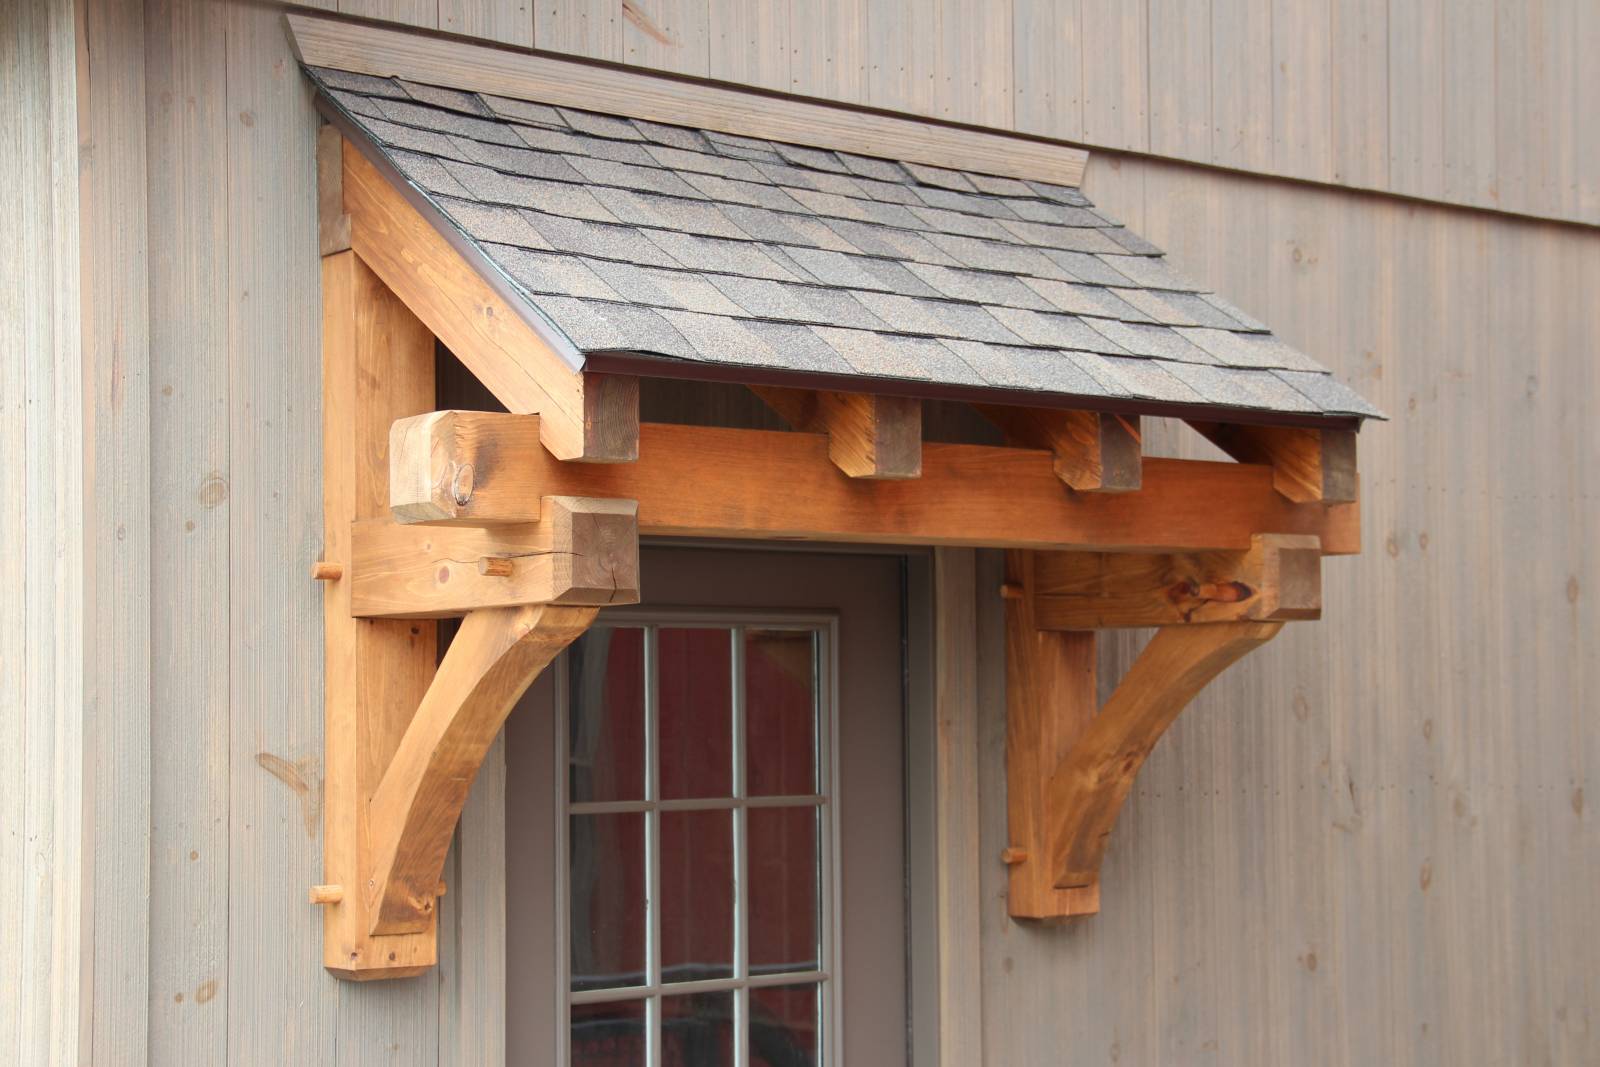 4' Timber Frame Eyebrow Roof on Roosevelt Display Garage (Ellington Location)